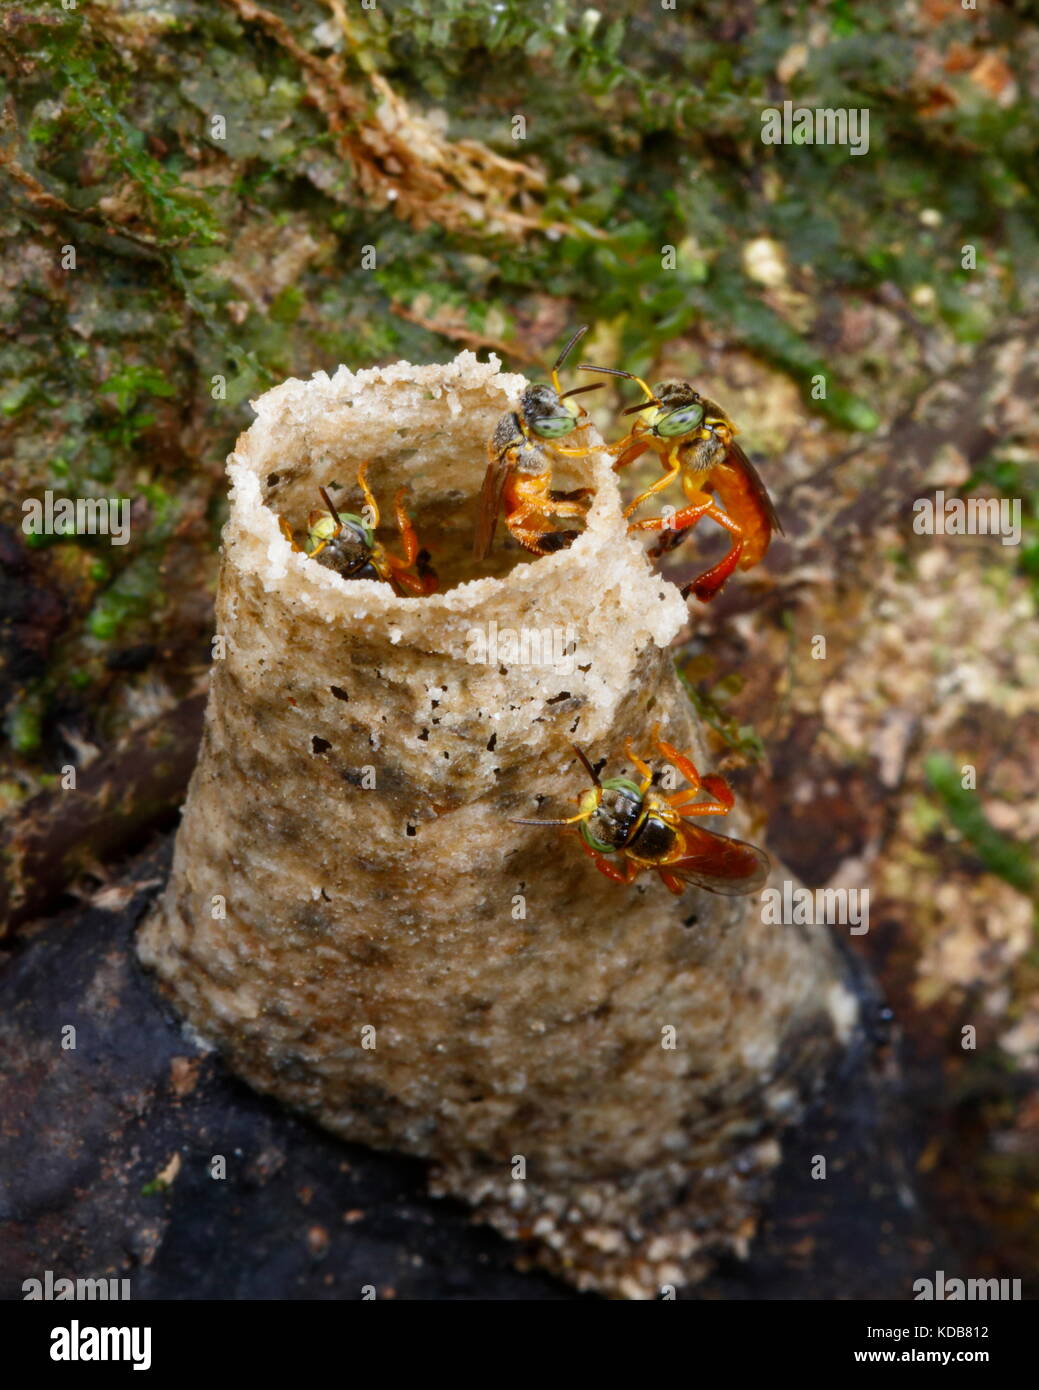 A tube nest of stingless bees, Tetragonisca species. Stock Photo